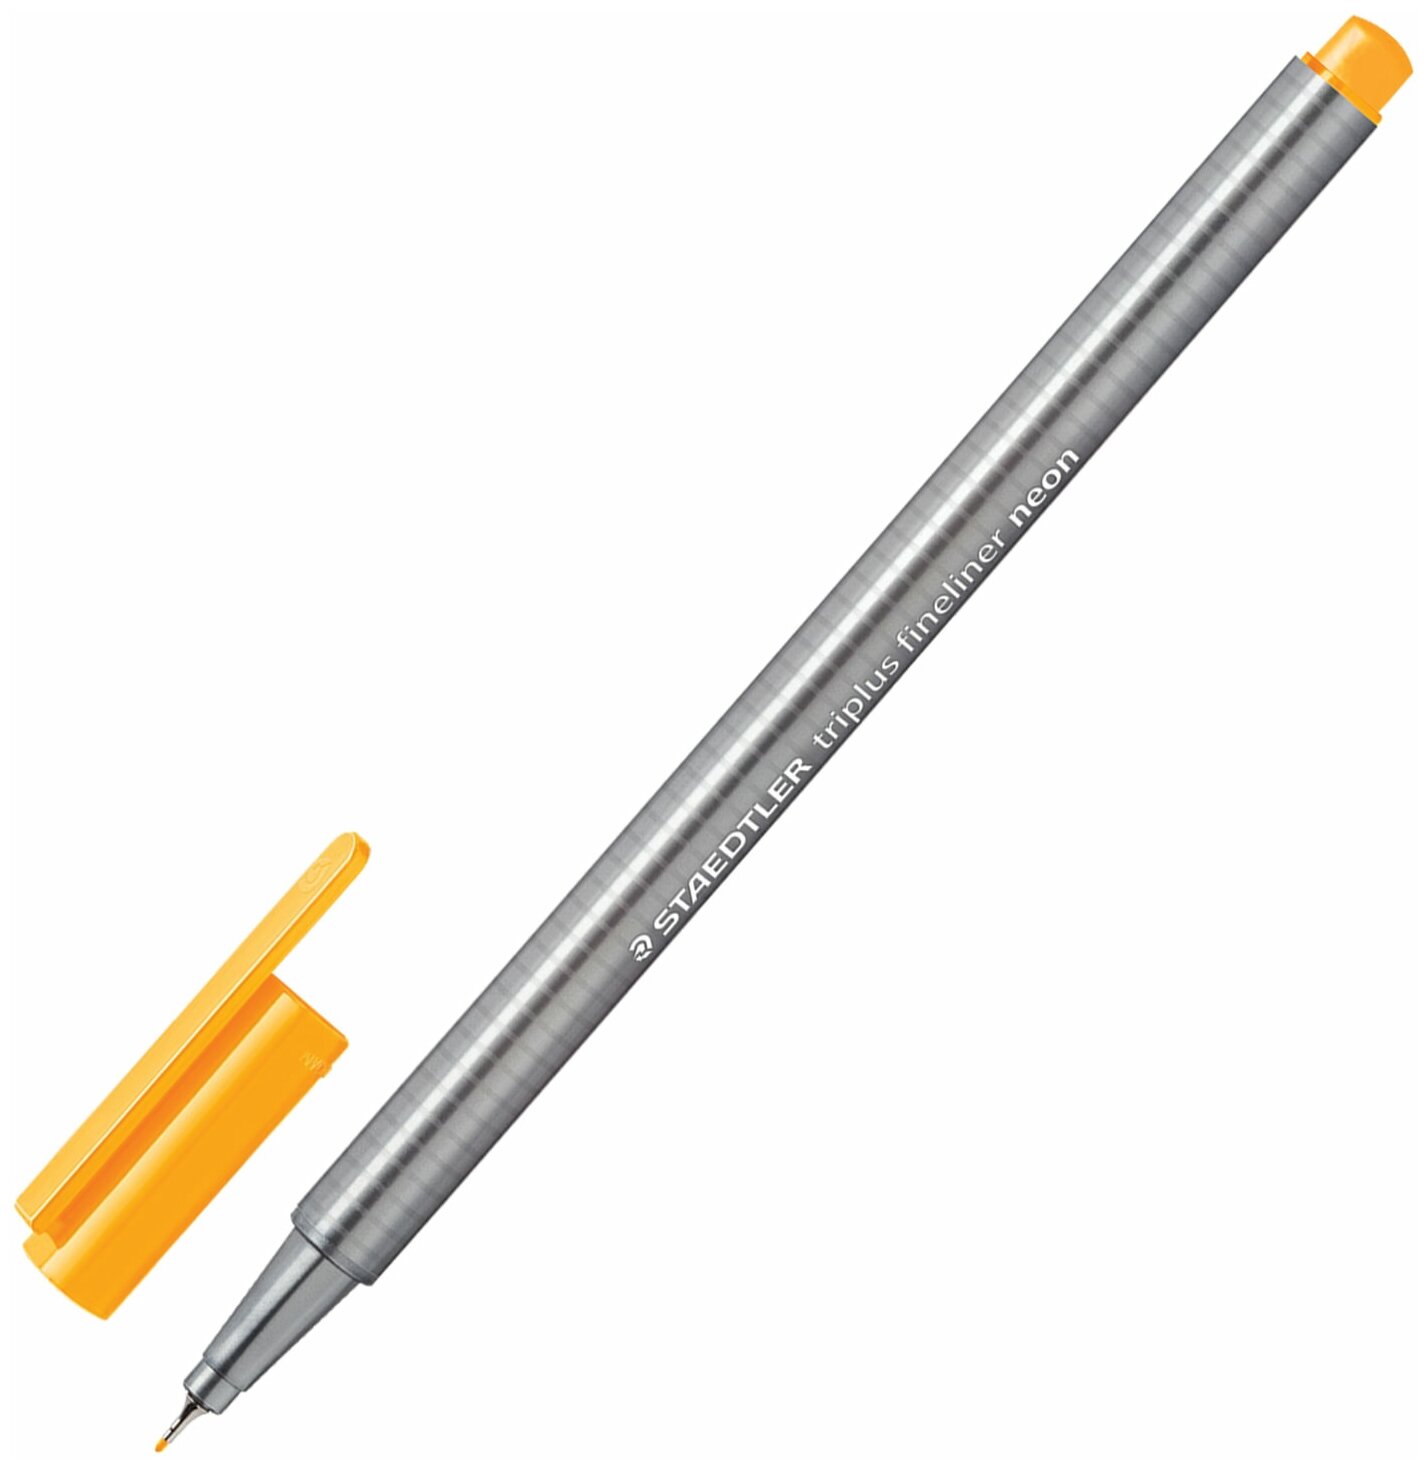 STAEDTLER Ручка капиллярная staedtler triplus fineliner , неоновая оранжевая, трехгранная, линия письма 0,3 мм, 334-401, 10 шт.